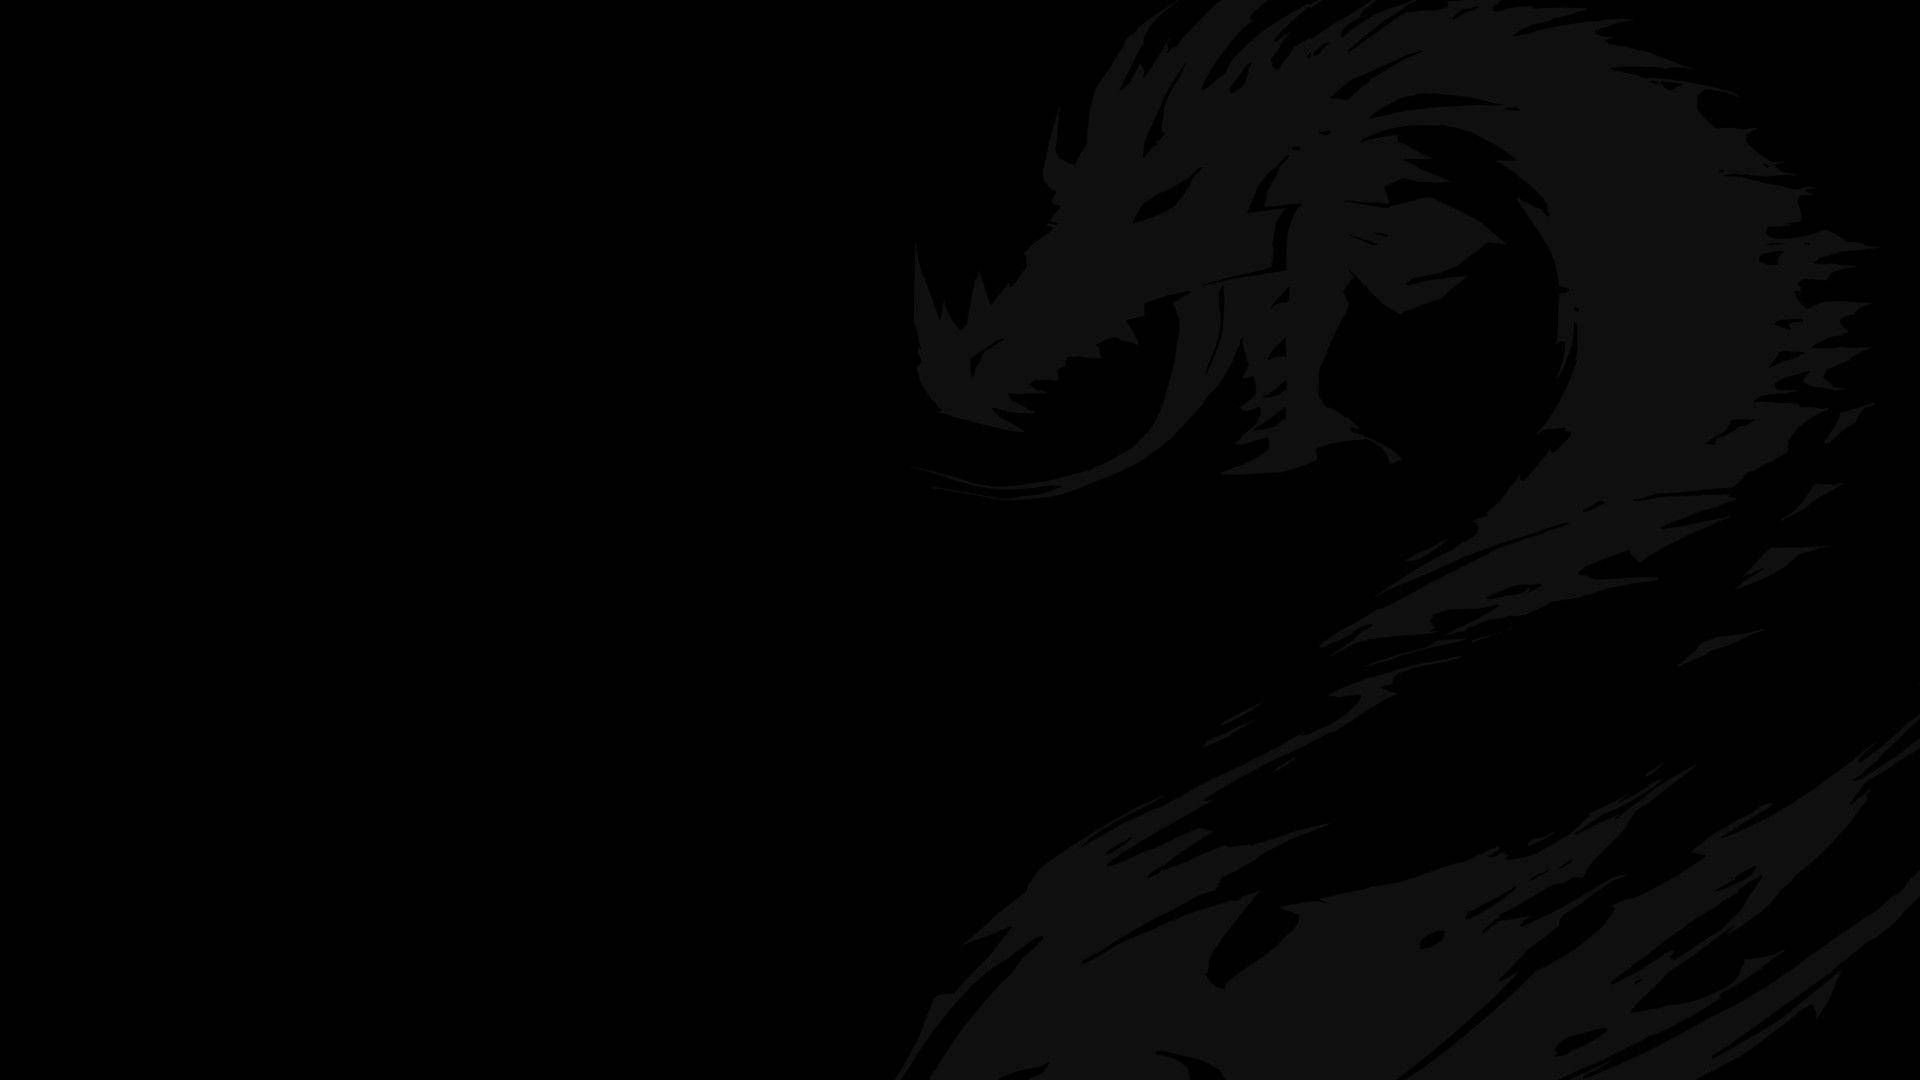 Download Solid Black 4k Dragon In Darkness Wallpaper 